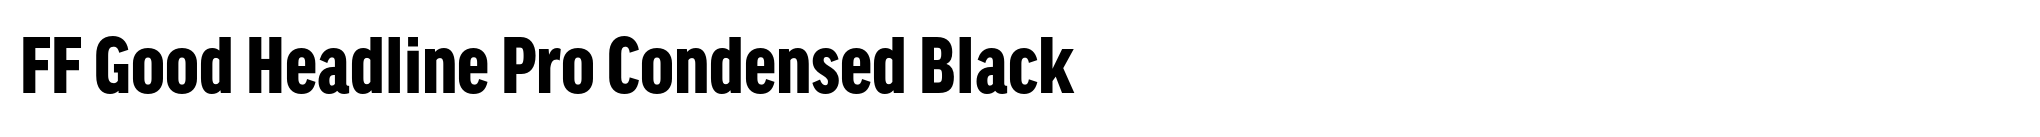 FF Good Headline Pro Condensed Black image